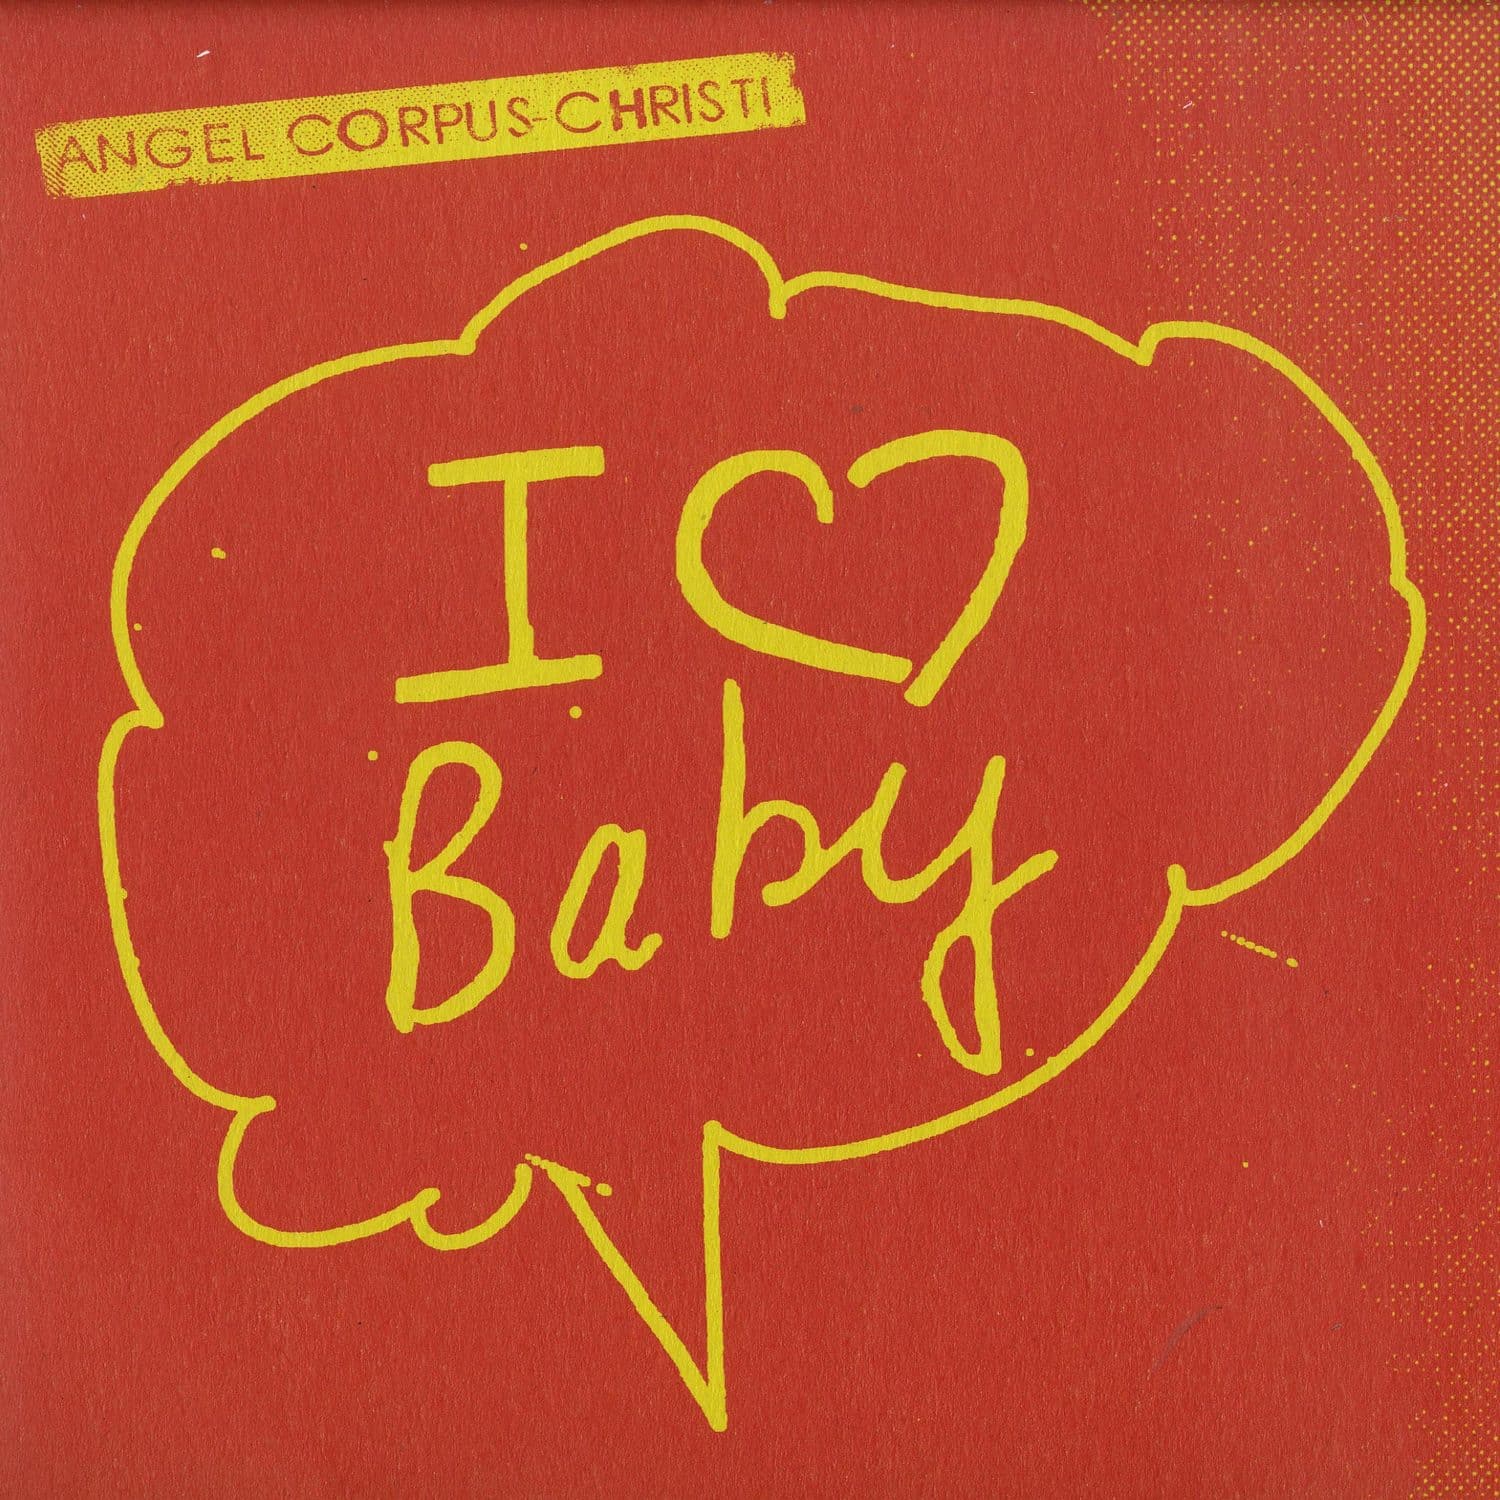 Angel Corpus Christi - I LOVE BABY 